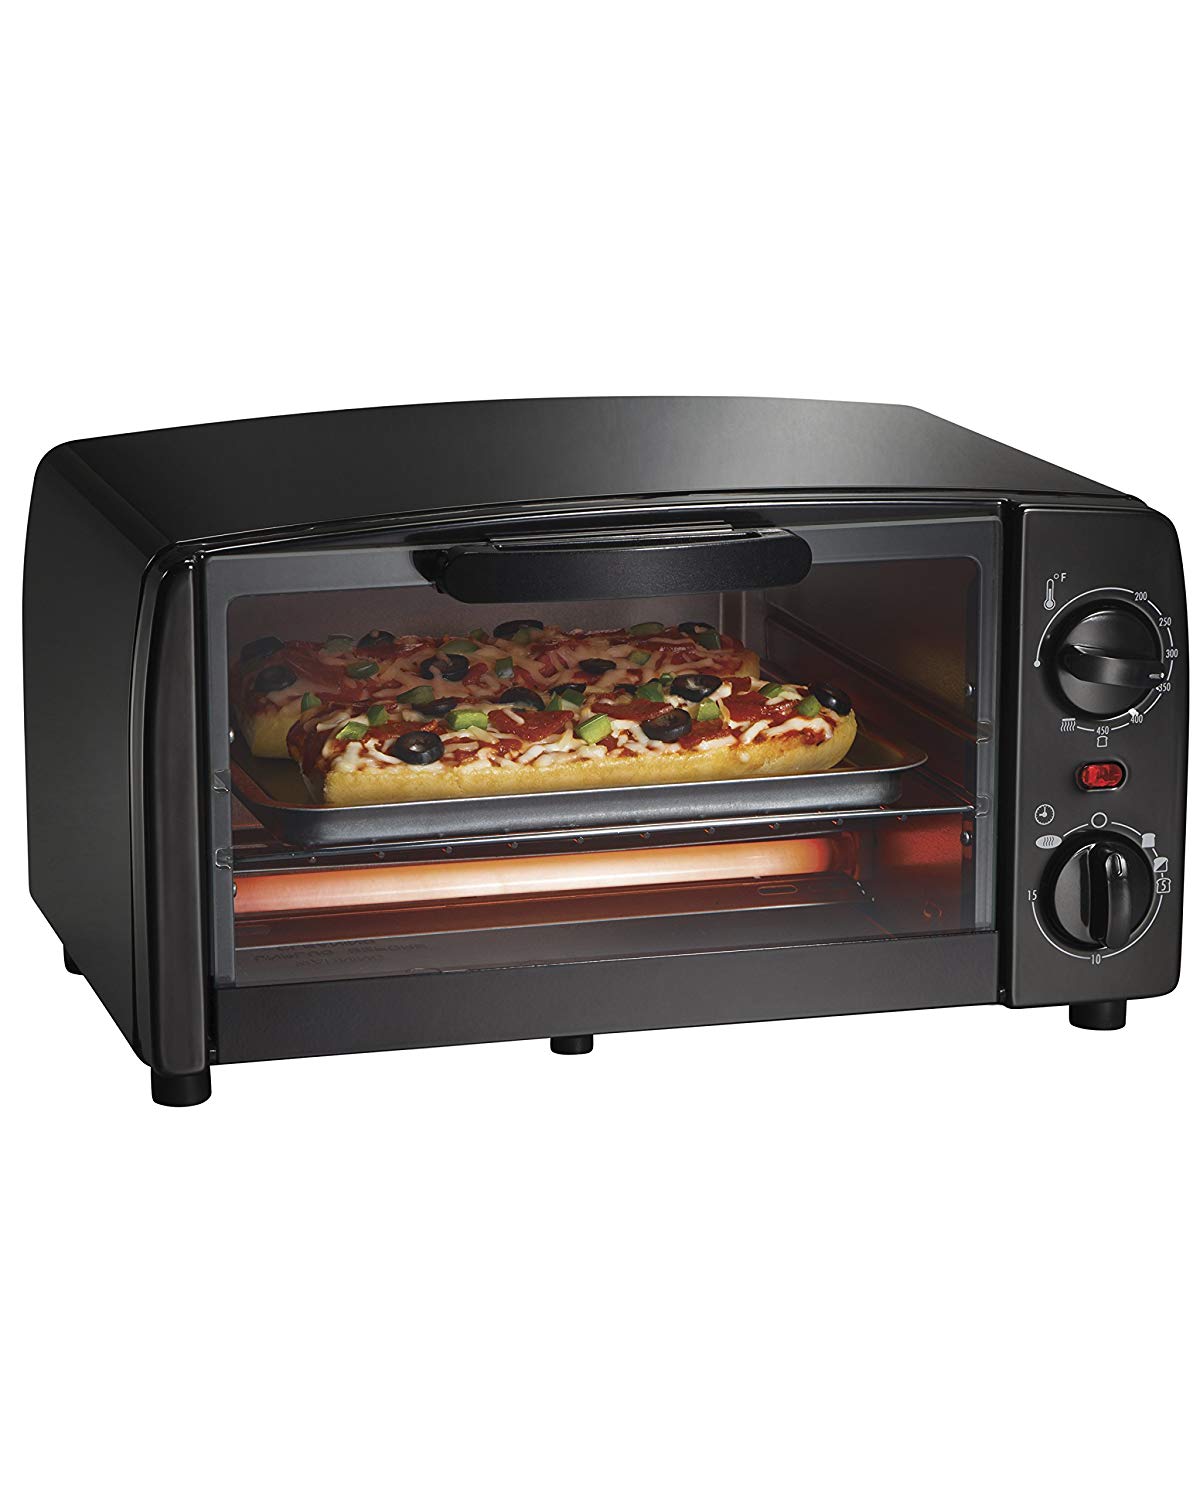 An image of Hamilton Beach Proctor Silex 31118R Black Four Slice Toaster Oven | Toasty Ovens 